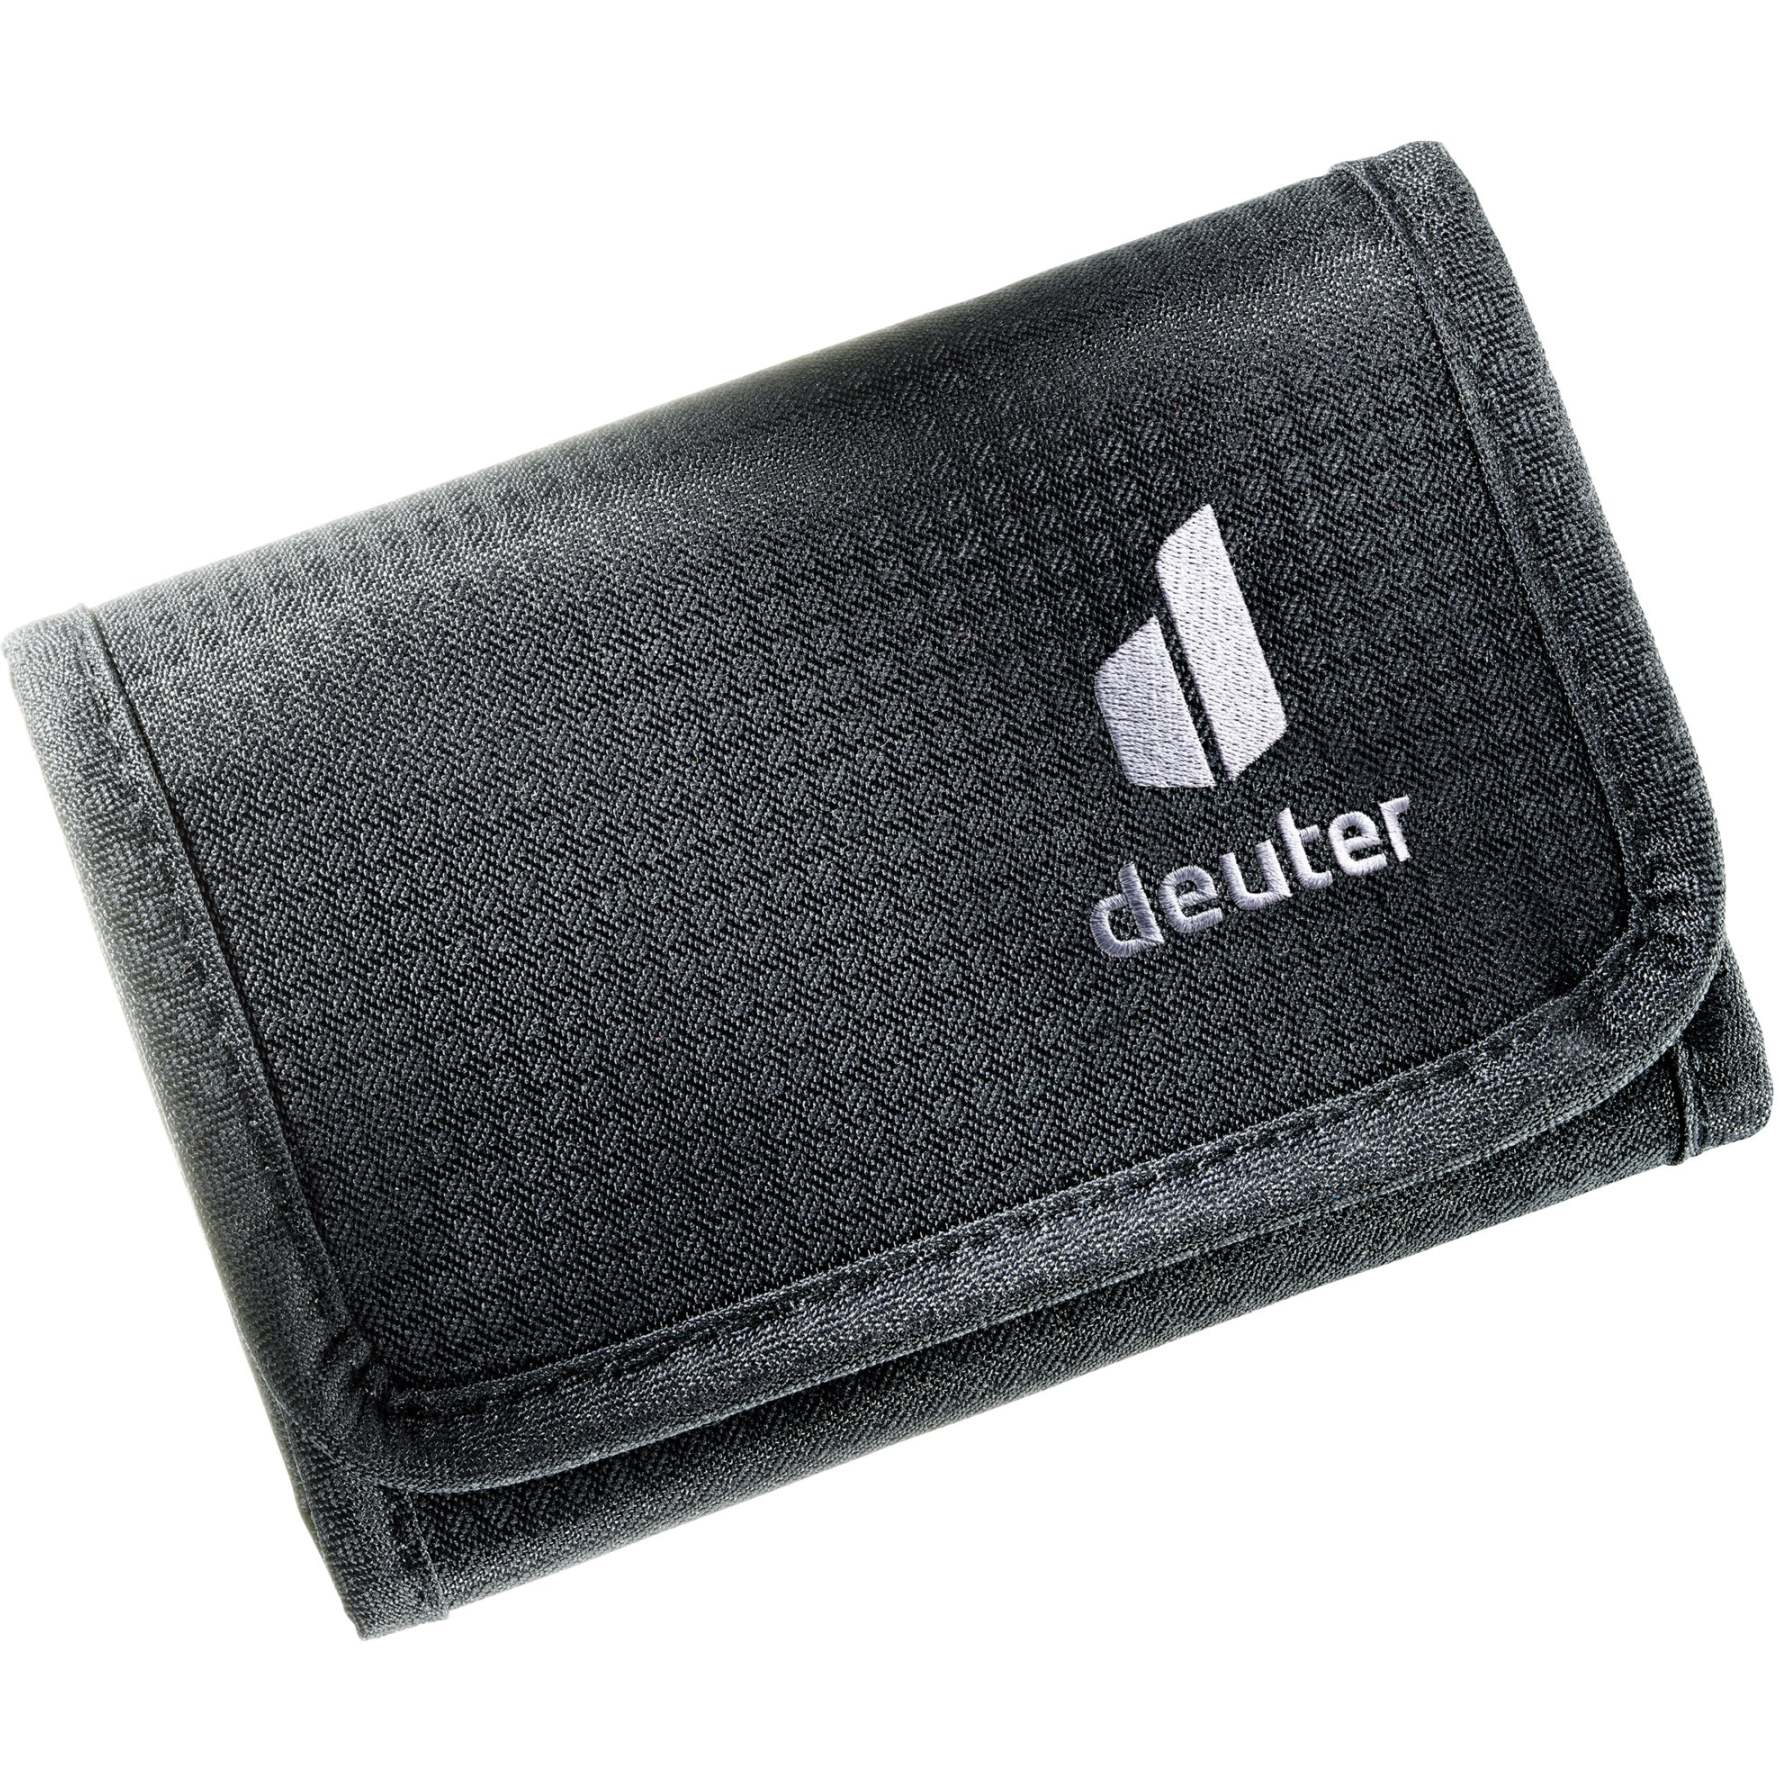 Image of Deuter Travel Wallet - black